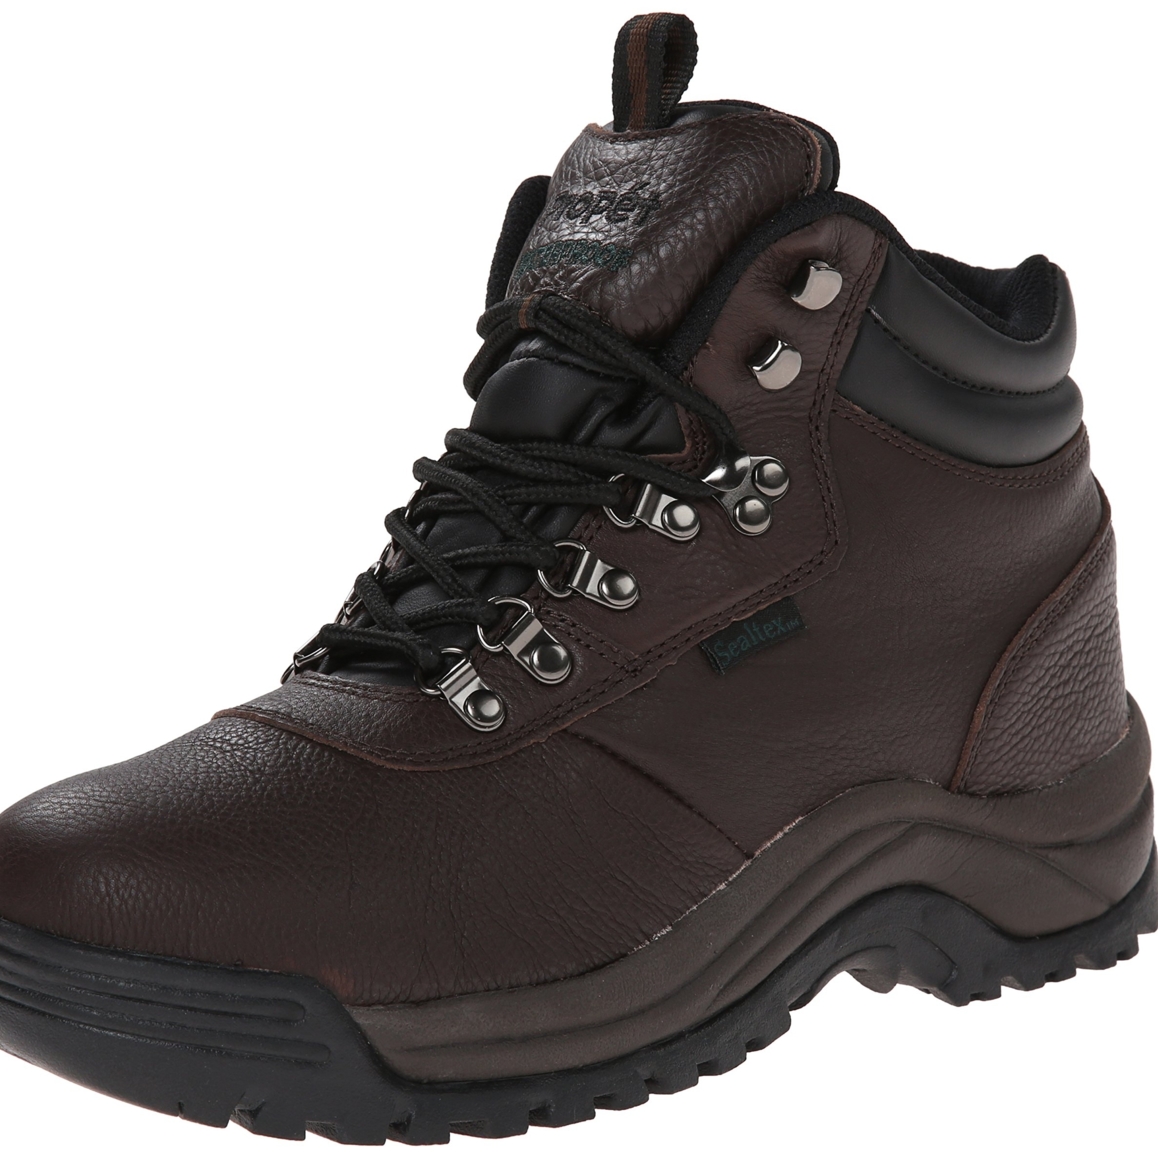 Propet Men's Cliff Walker Hiking Boot Bronco Brown - M3188BRO - BRONCO BROWN, 11.5-2E